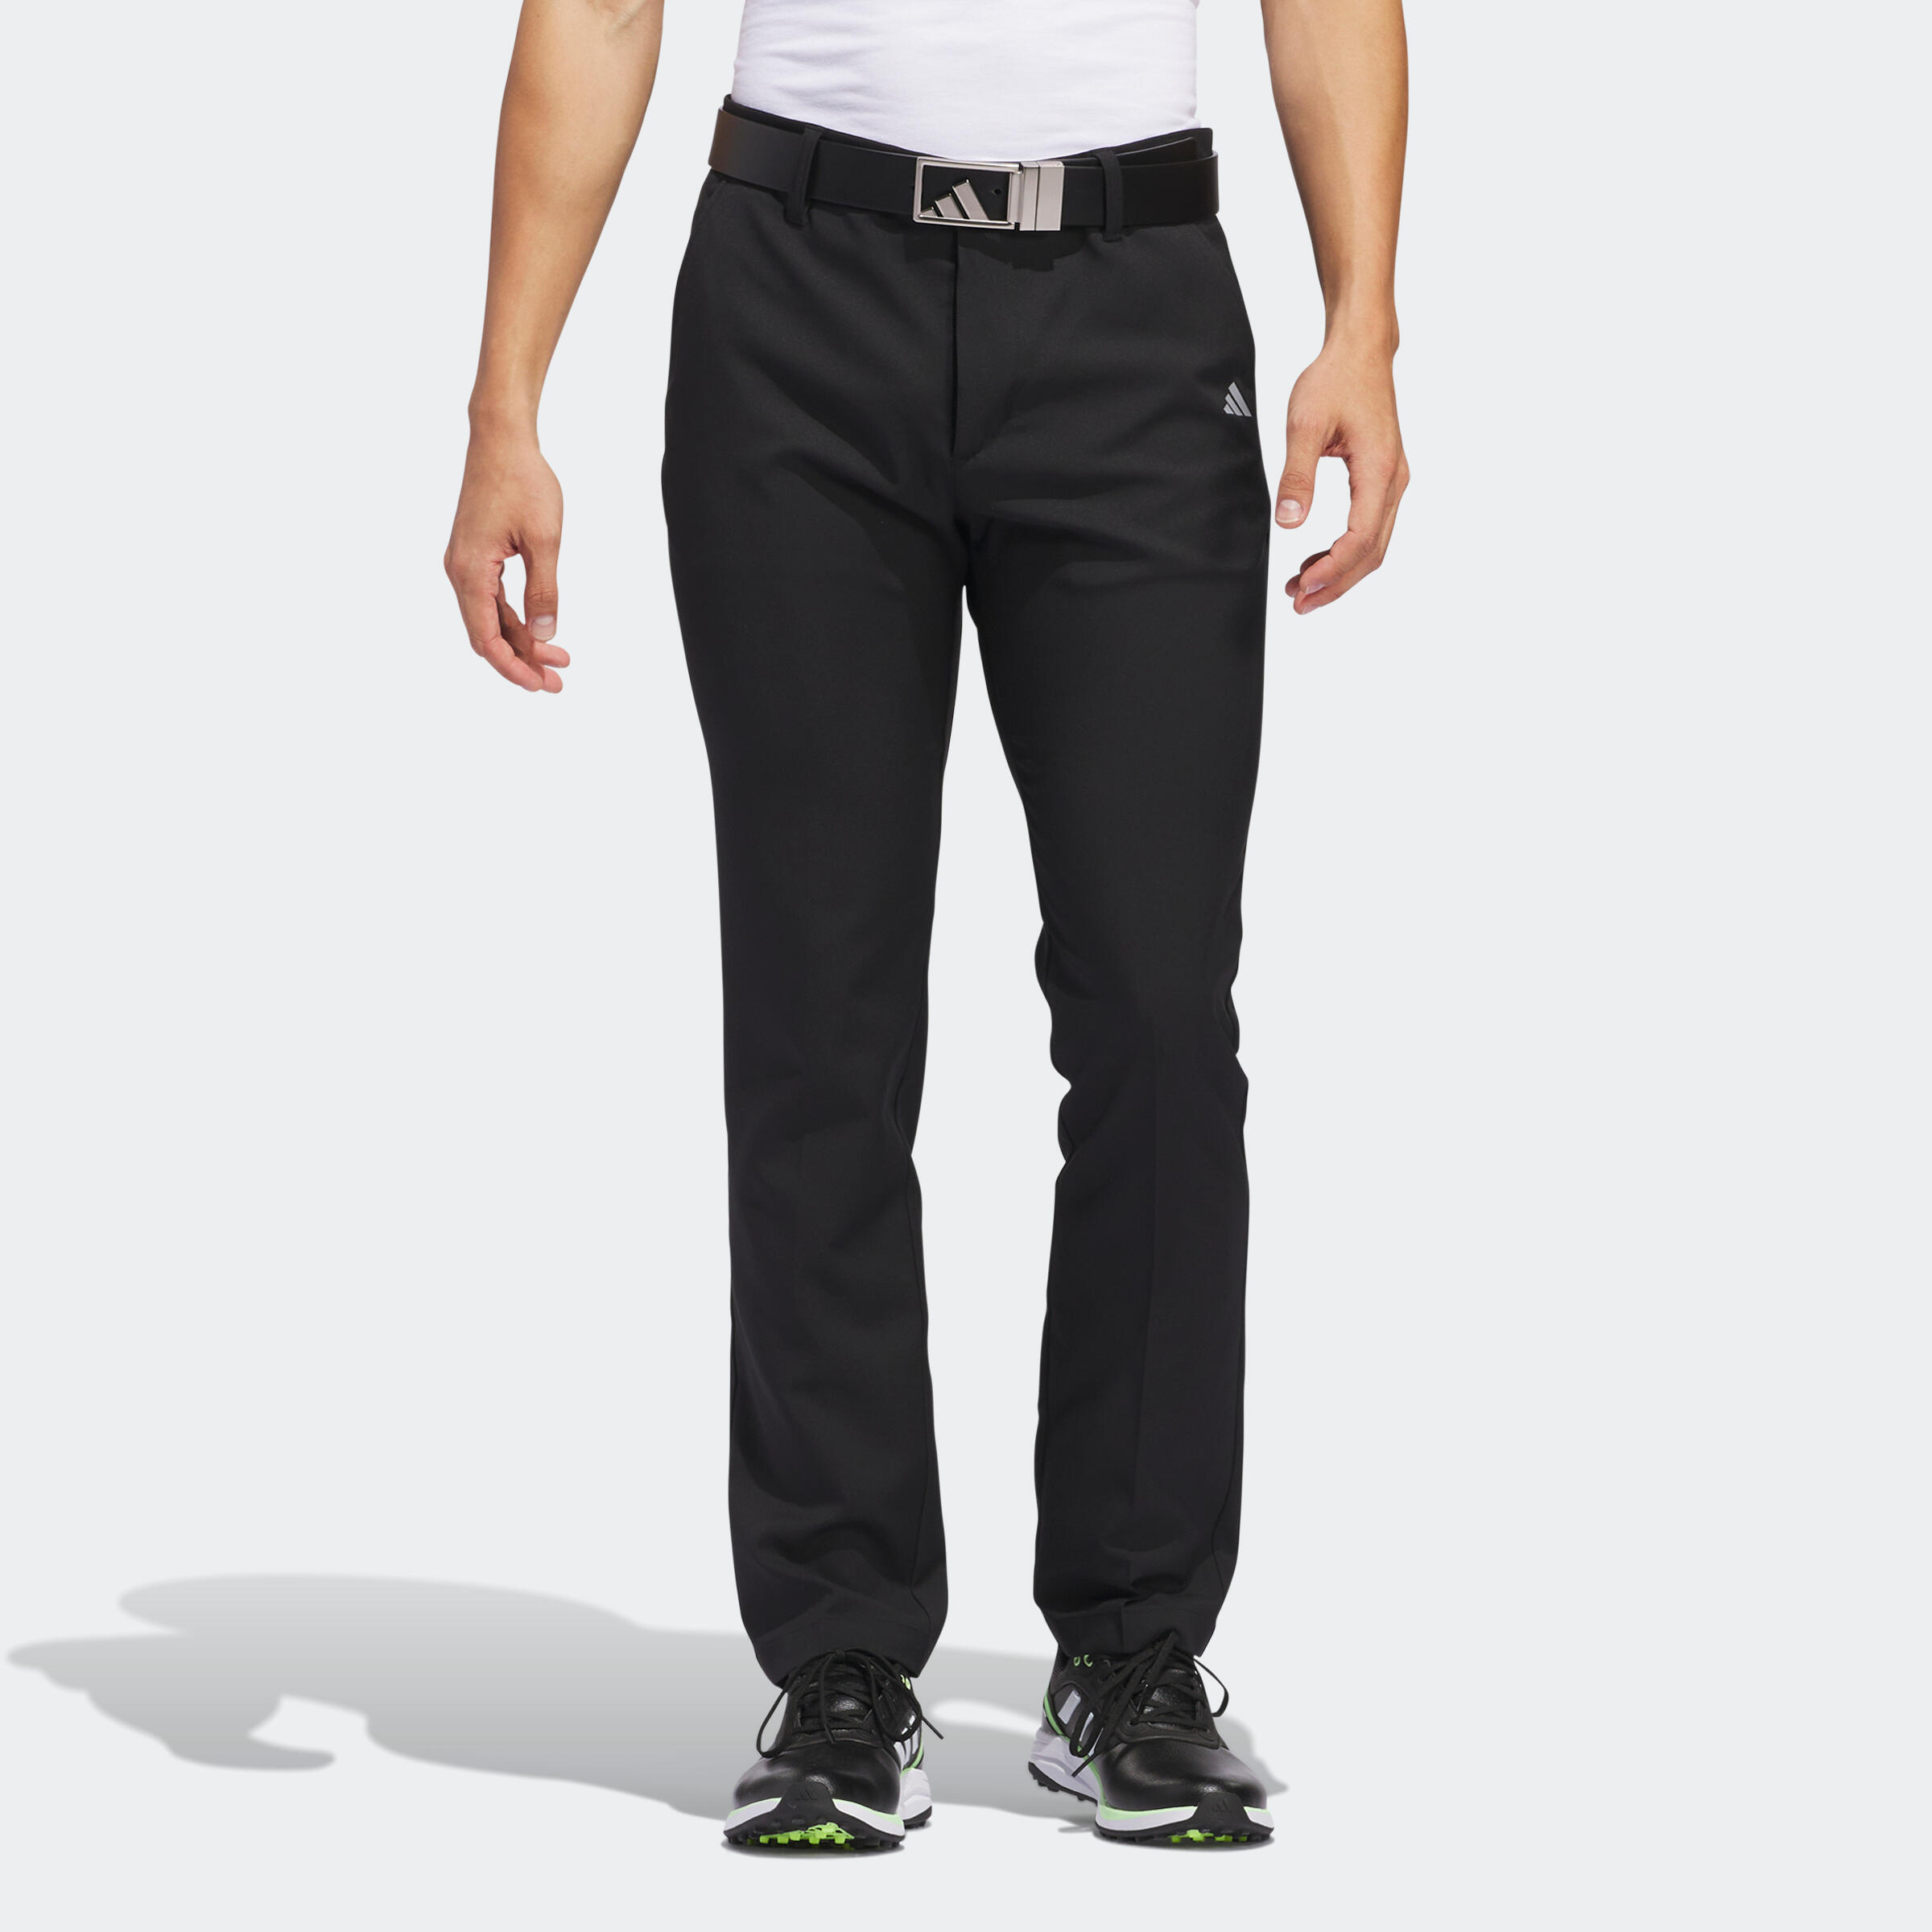 Men's golf trousers - Adidas black 1/4